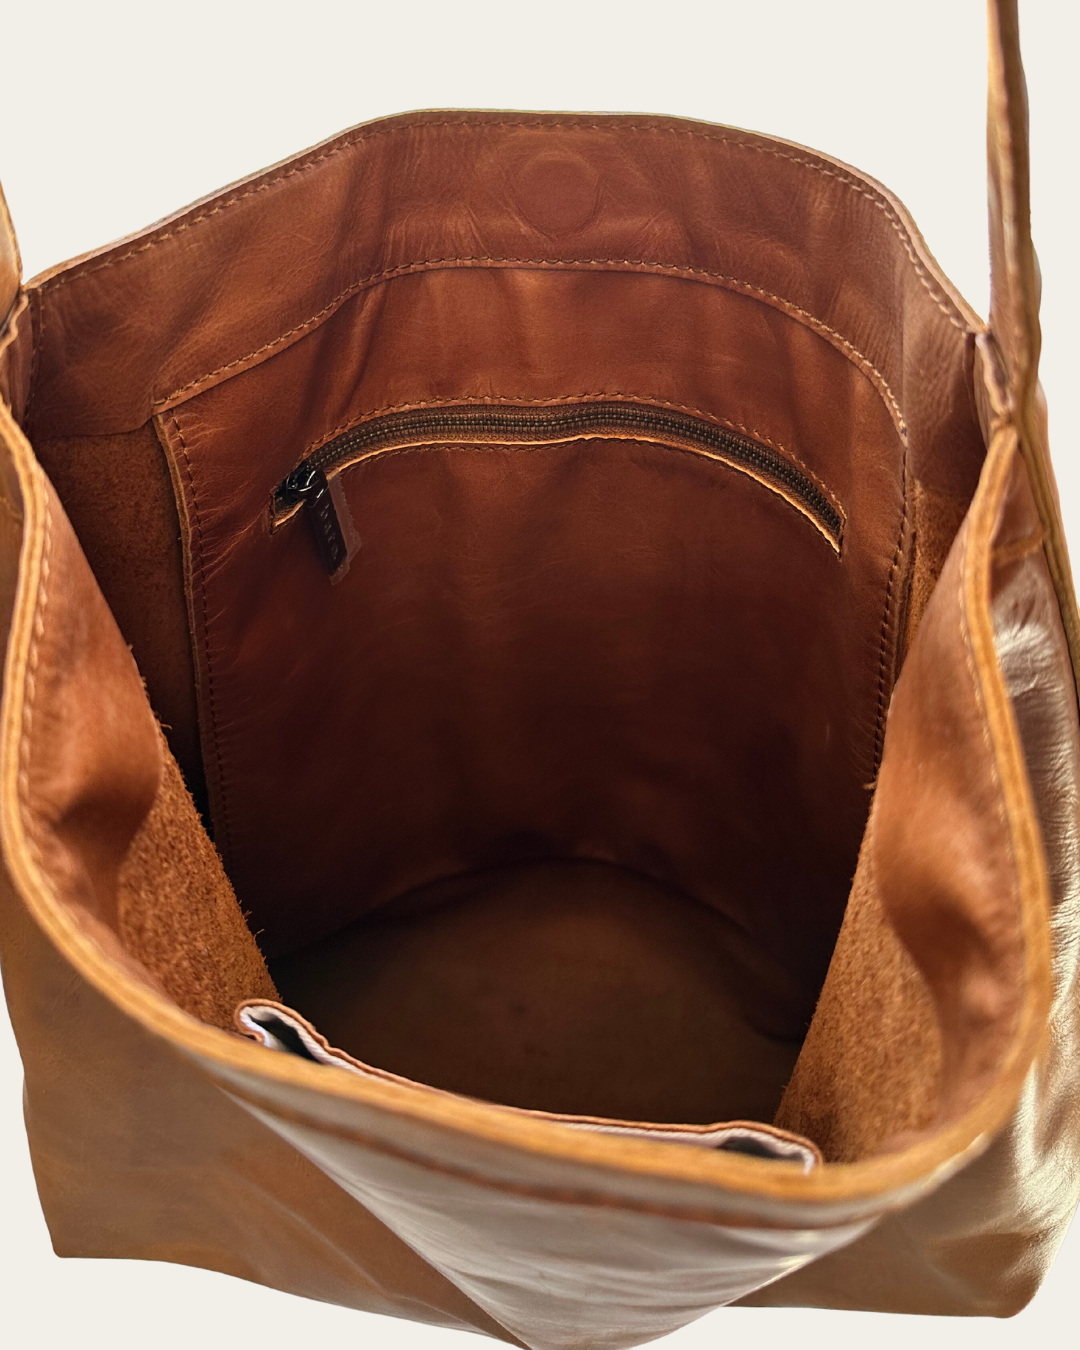 LuLu Bag - BARE Leather